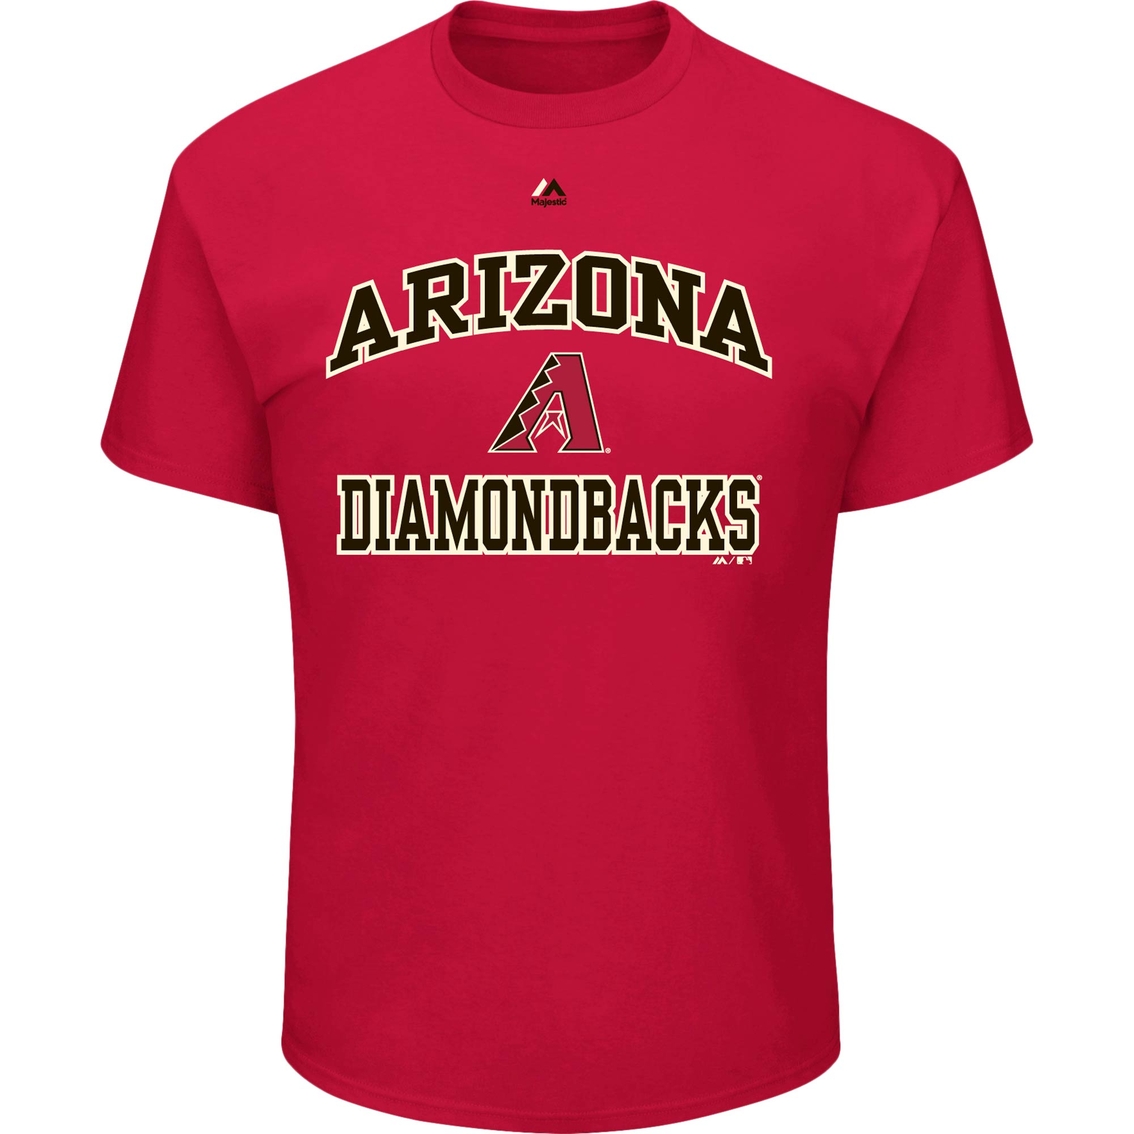 Majestic Athletic MLB Arizona Diamondbacks Heart and Soul Tee - Image 2 of 3